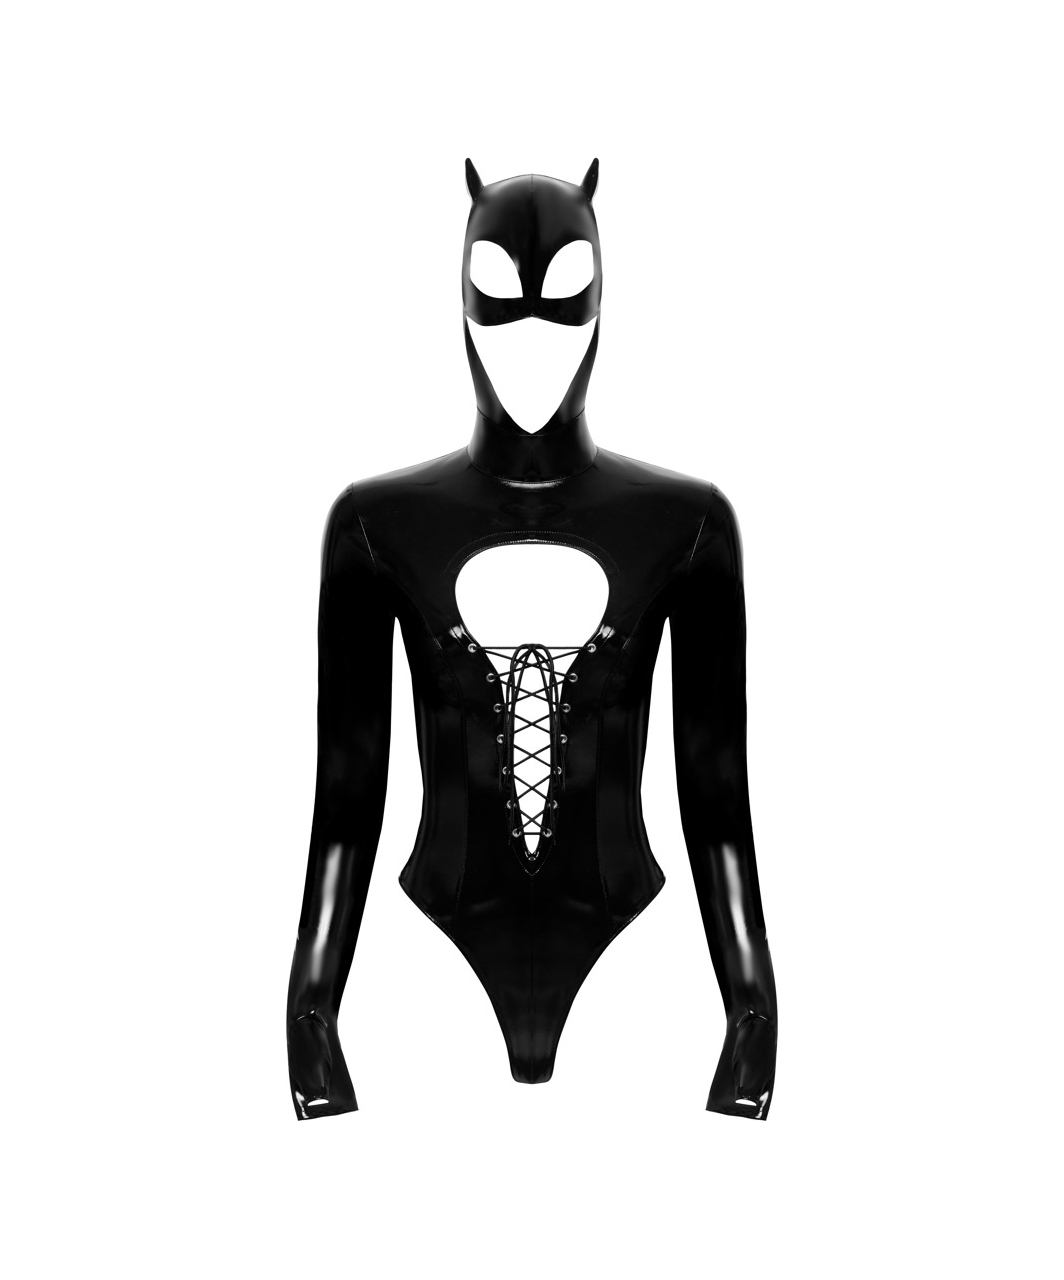 Black Level black vinyl bodysuit with cat hood mask